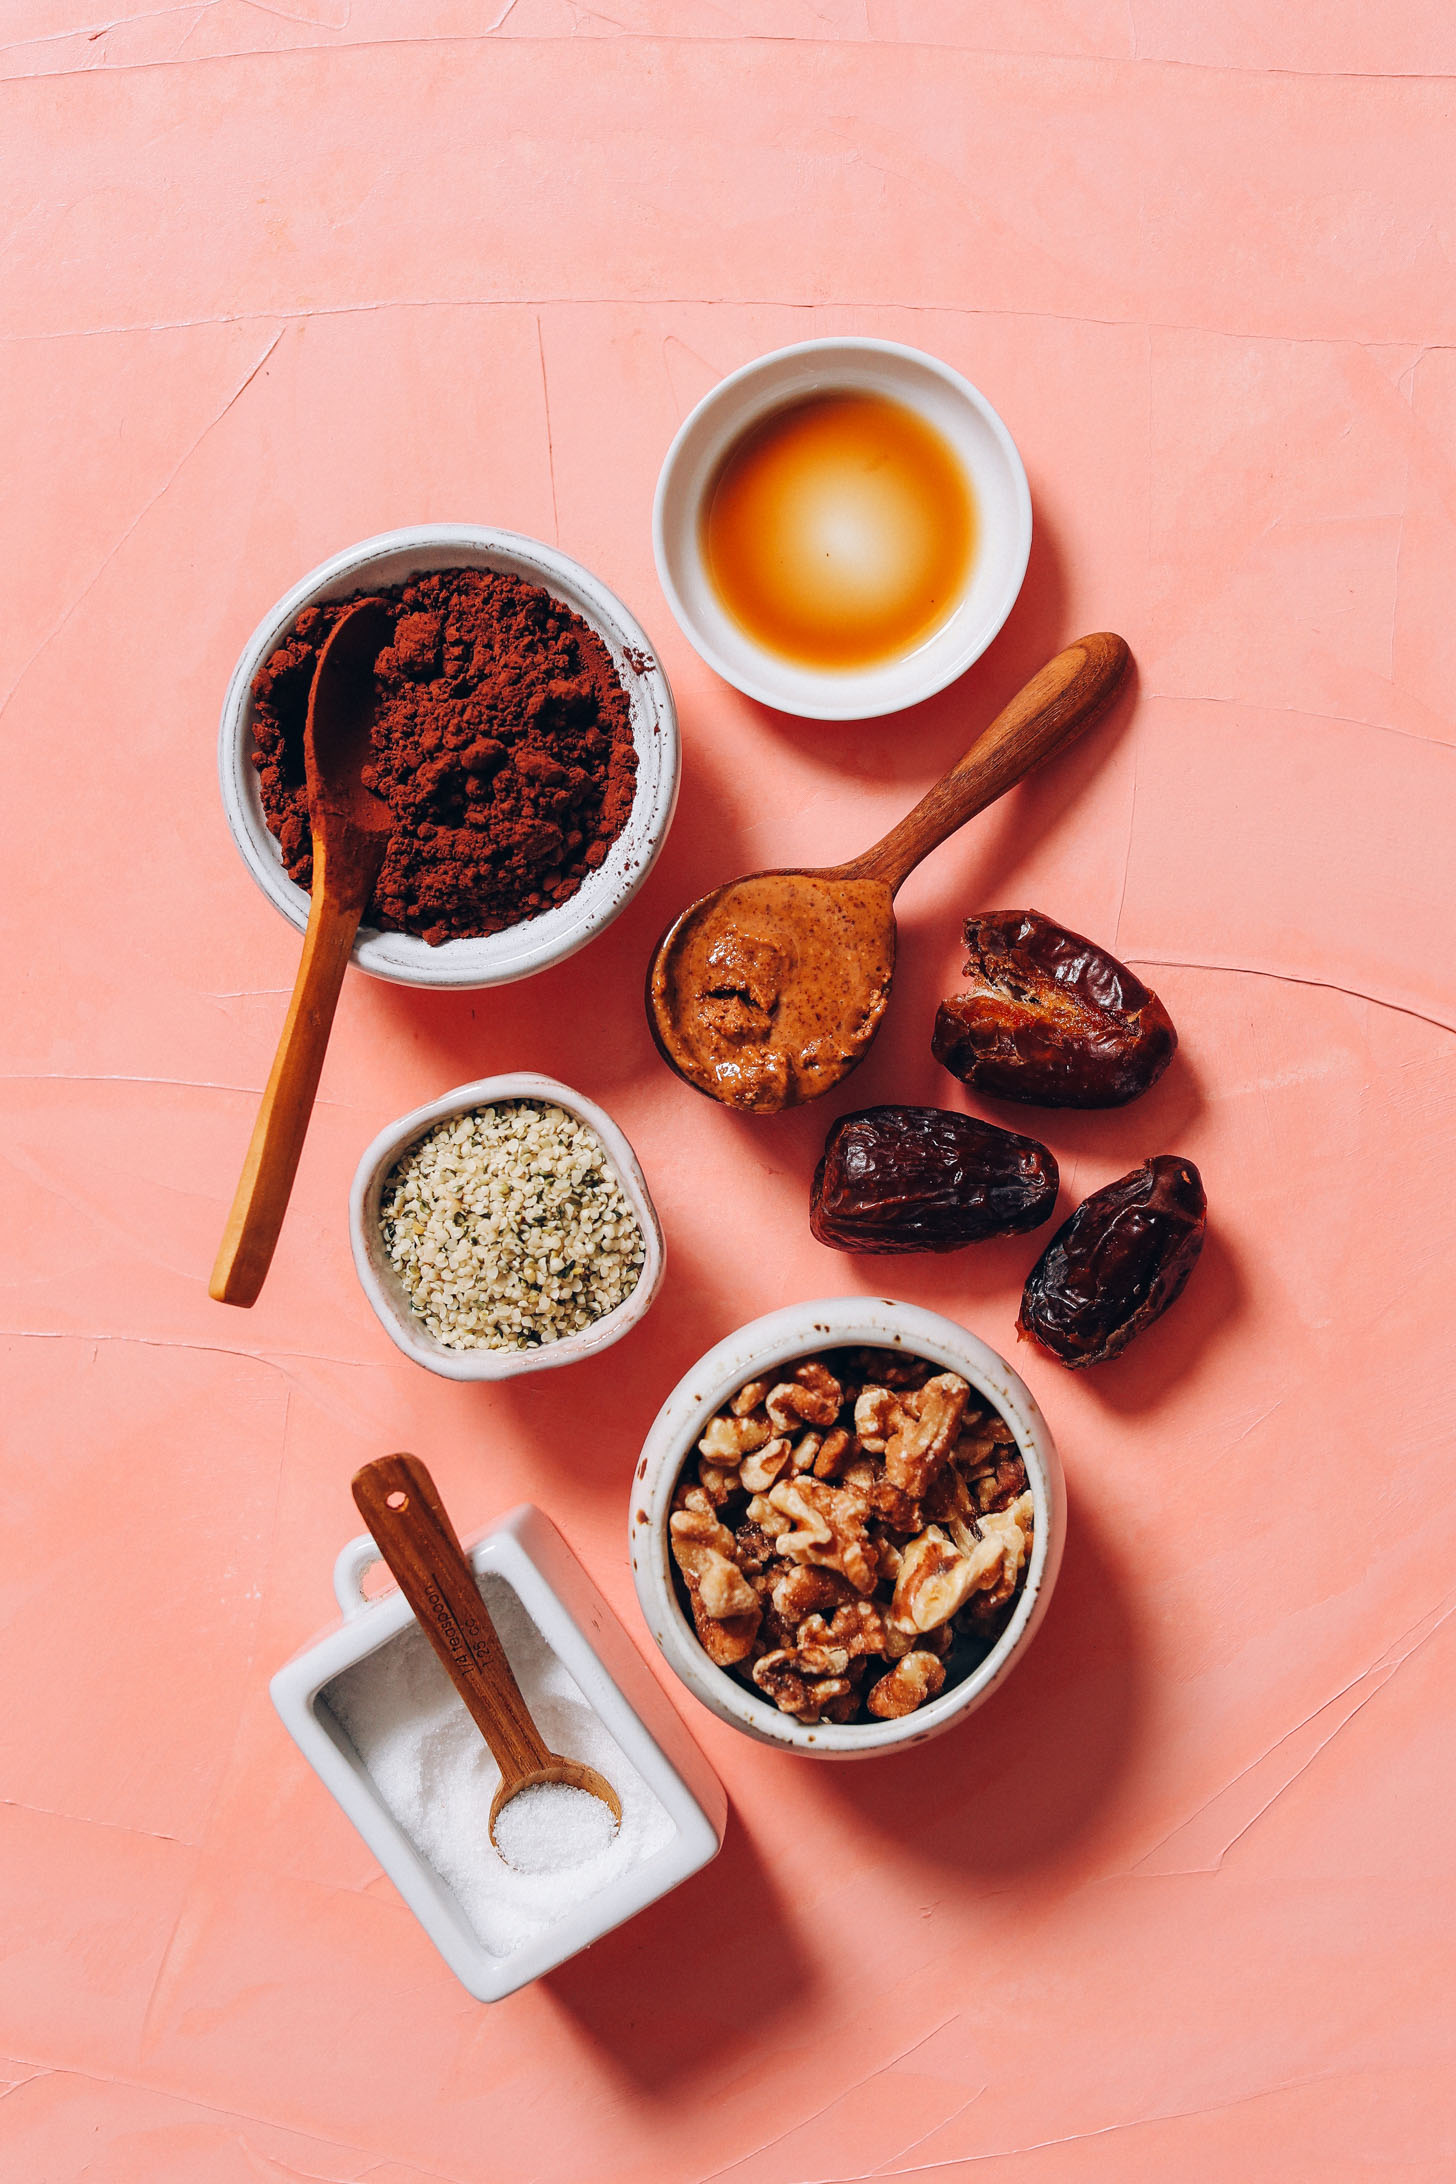 Cacao powder, vanilla, almond butter, dates, walnuts, hemp seeds, and sea salt